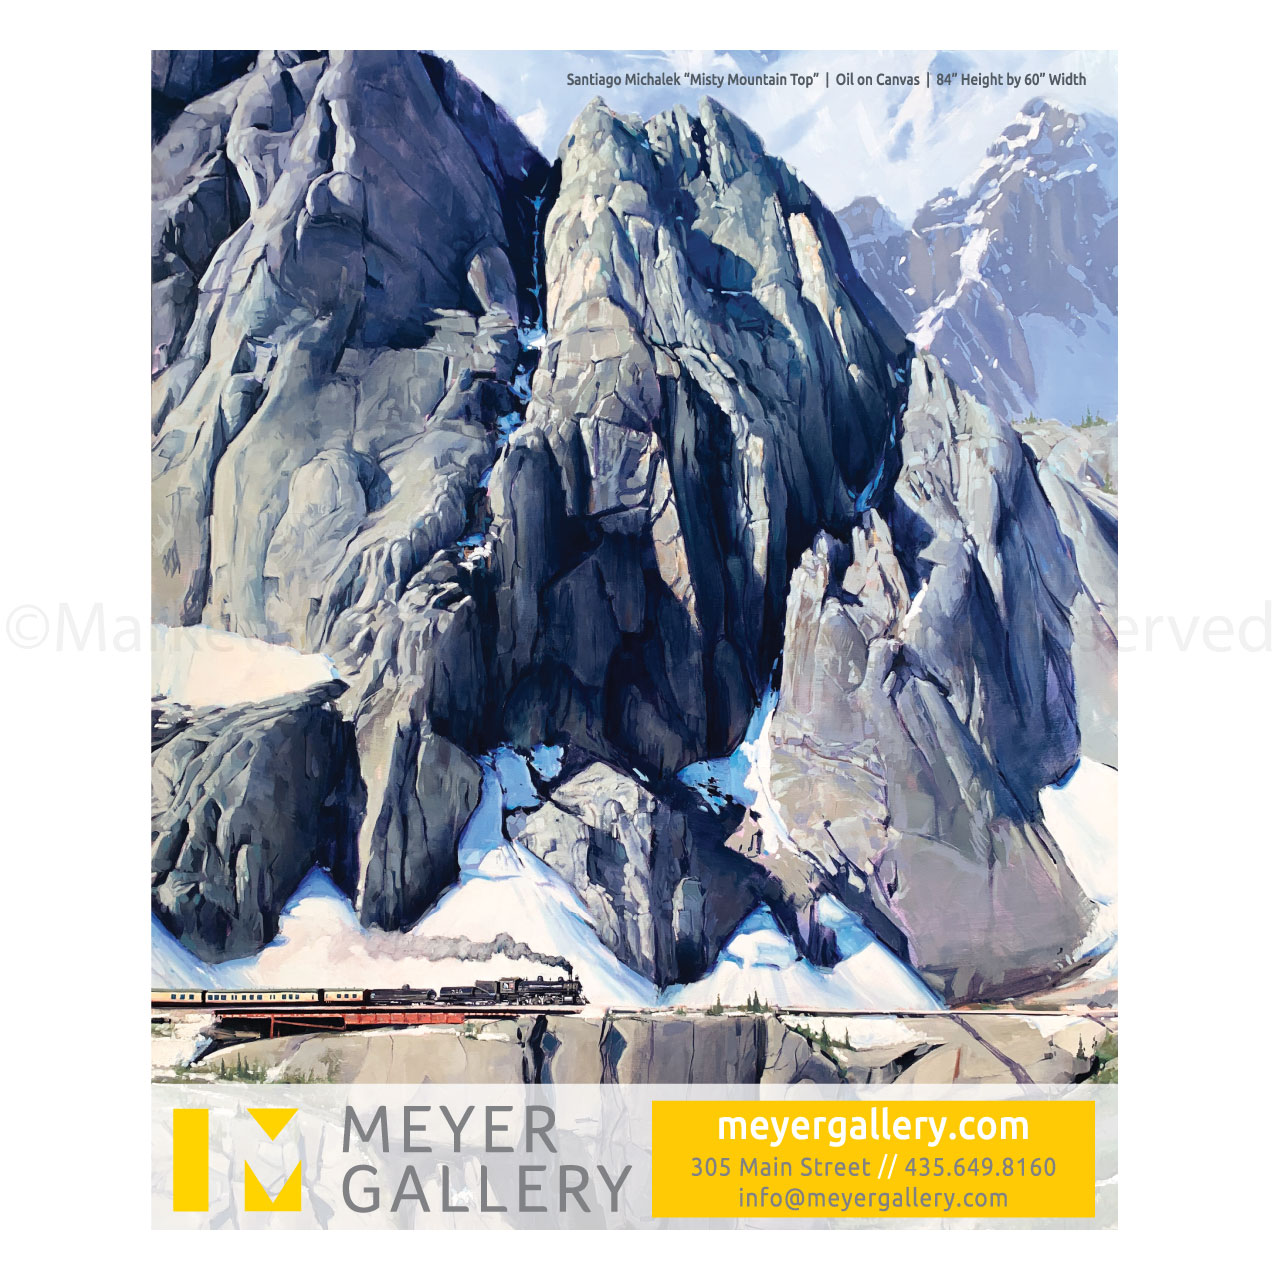 Marketing by Design | Portfolio: Meyer Gallery Misty Mountain Top Ad